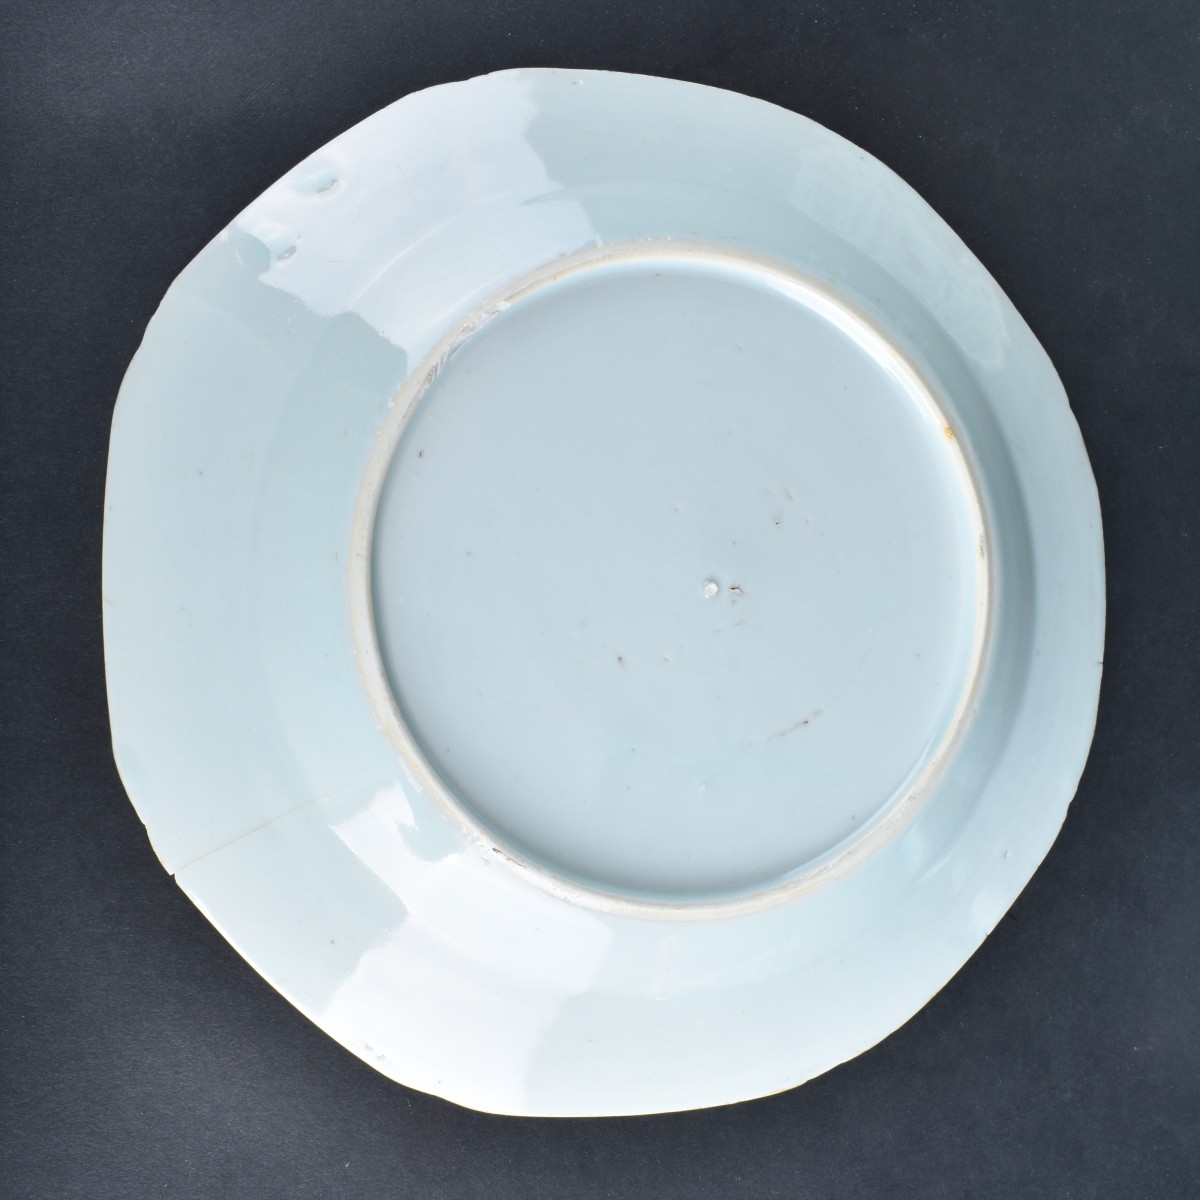 Chinese Plates